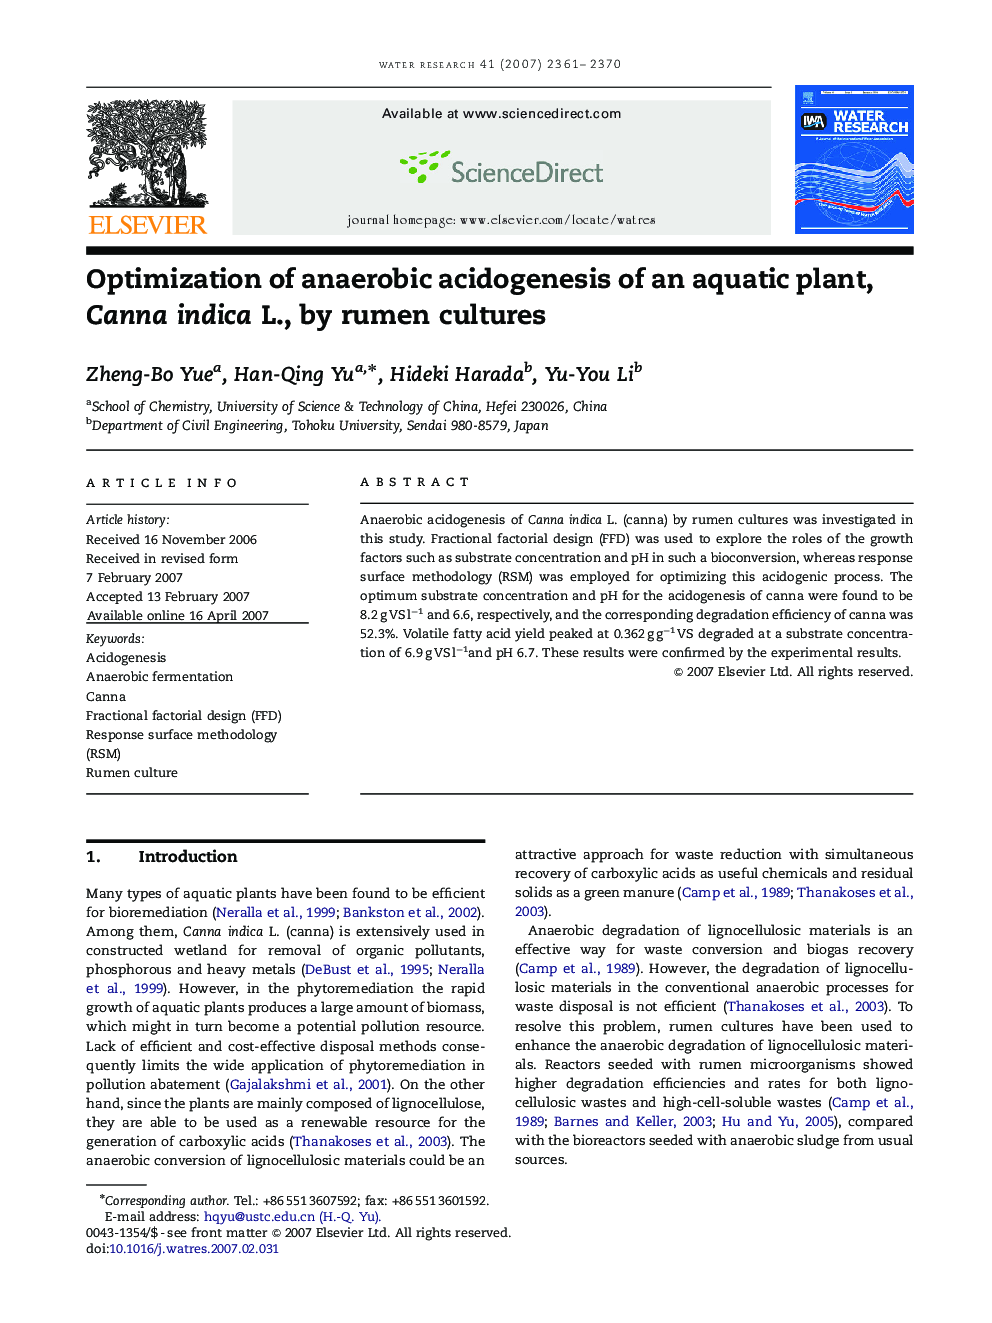 Optimization of anaerobic acidogenesis of an aquatic plant, Canna indica L., by rumen cultures